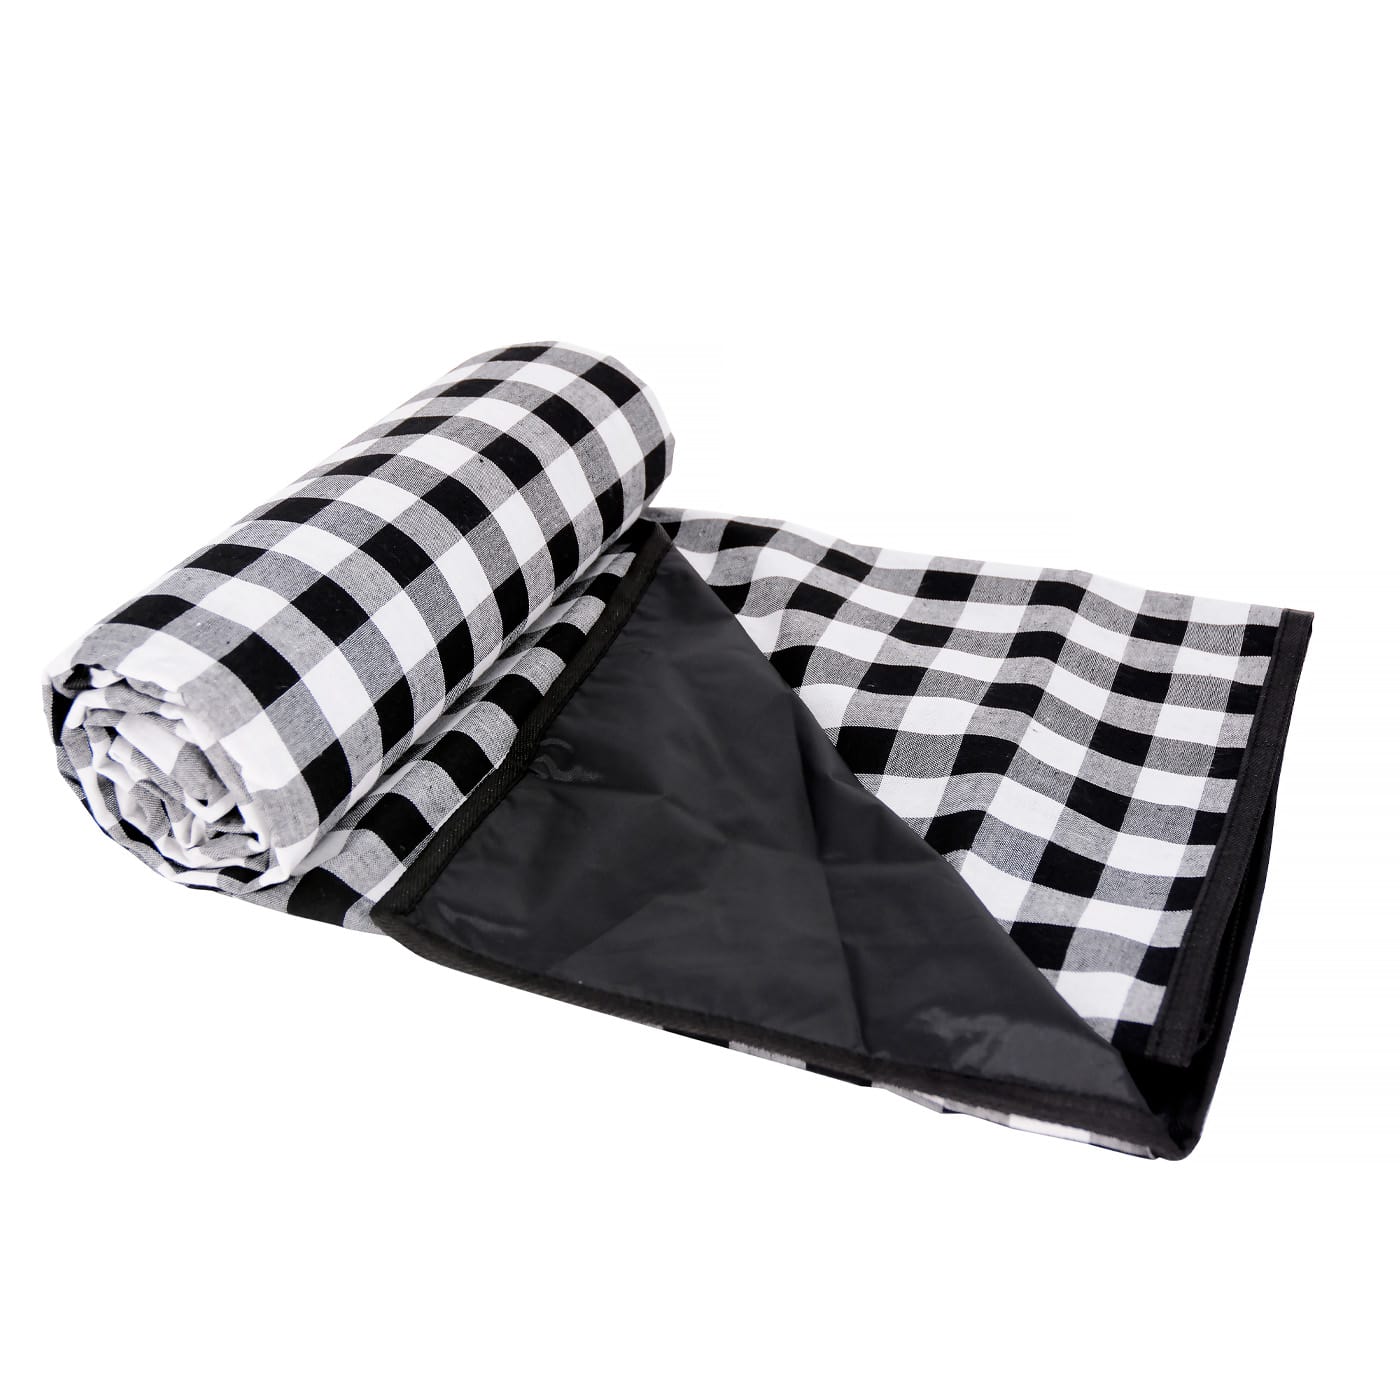 Waterproof picnic blanket Montaigne